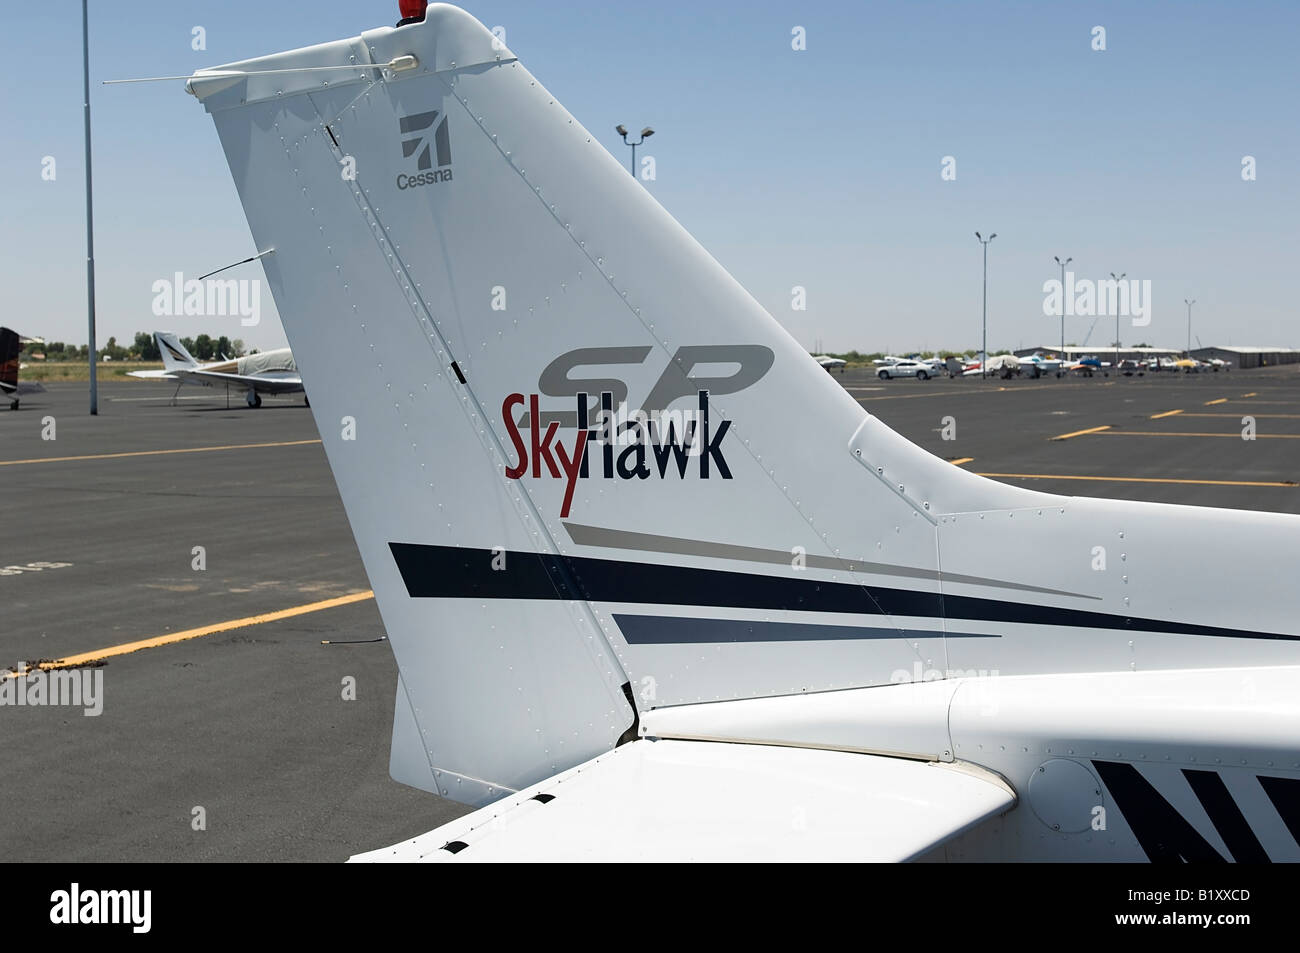 Tail section of a modern Cessna 172 SP SkyHawk light general aviation aircraft. Stock Photo